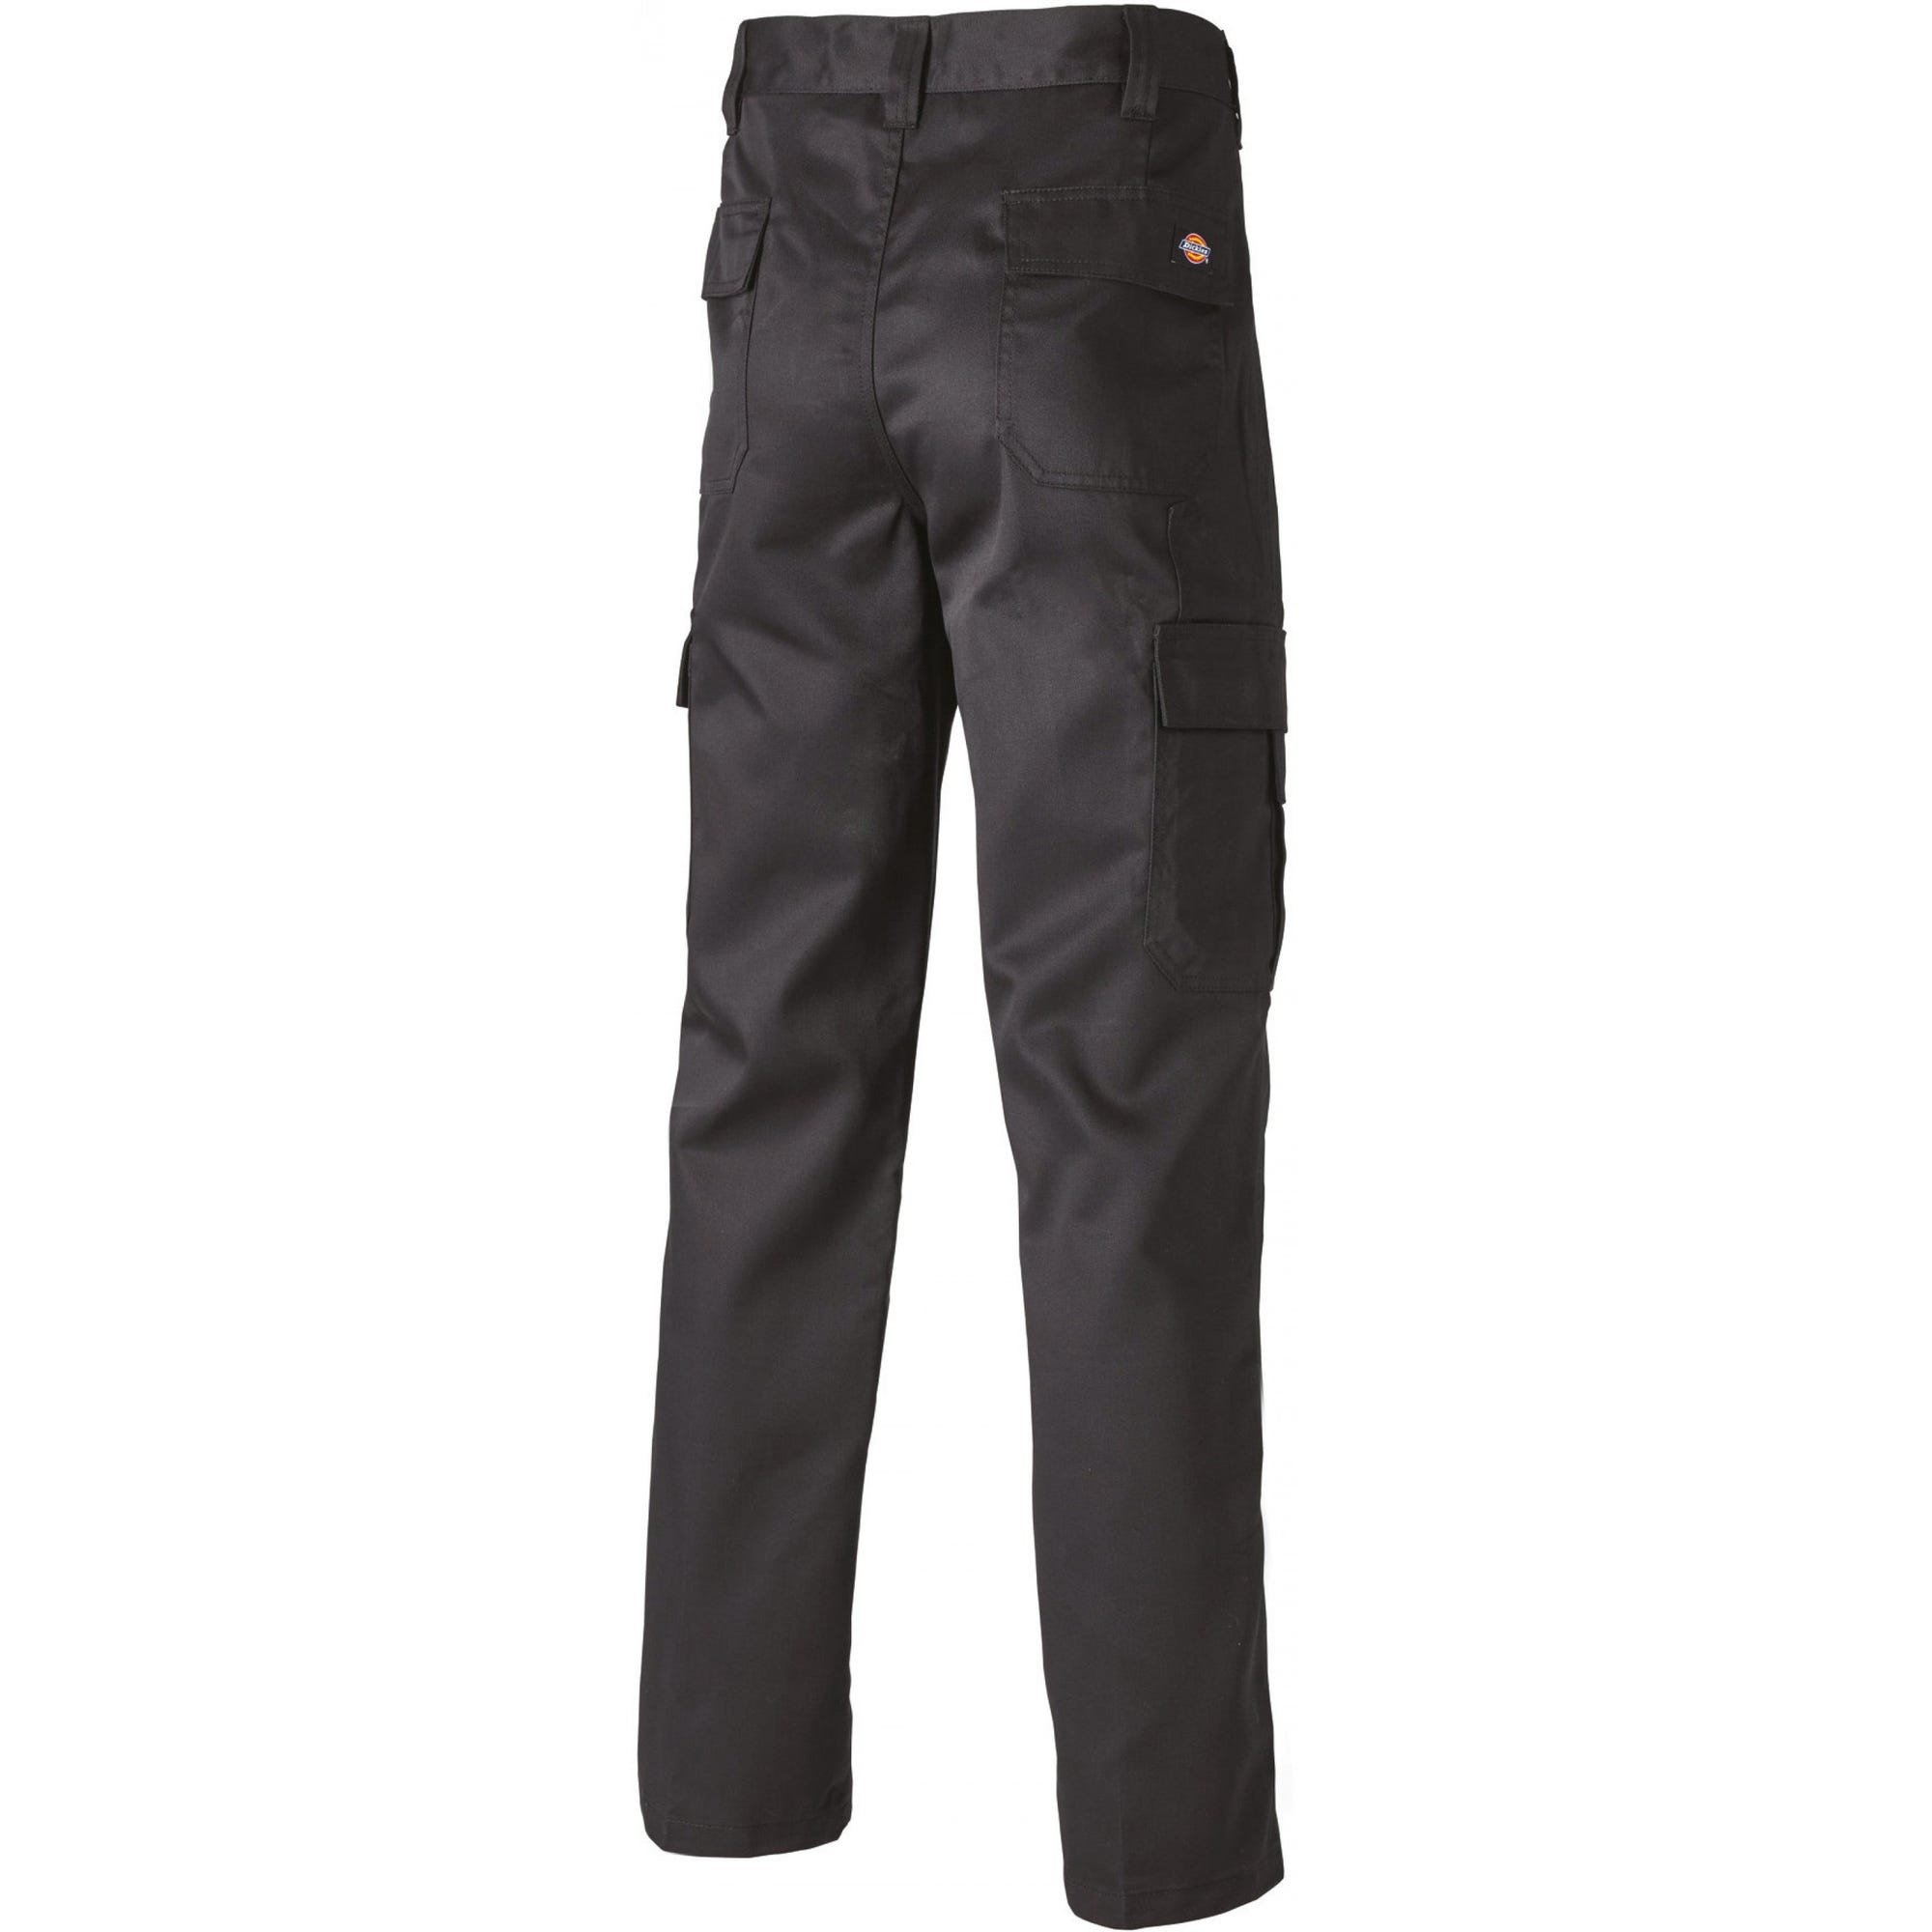 Pantalon Everyday Kaki et noir- Dickies - Taille 48 7